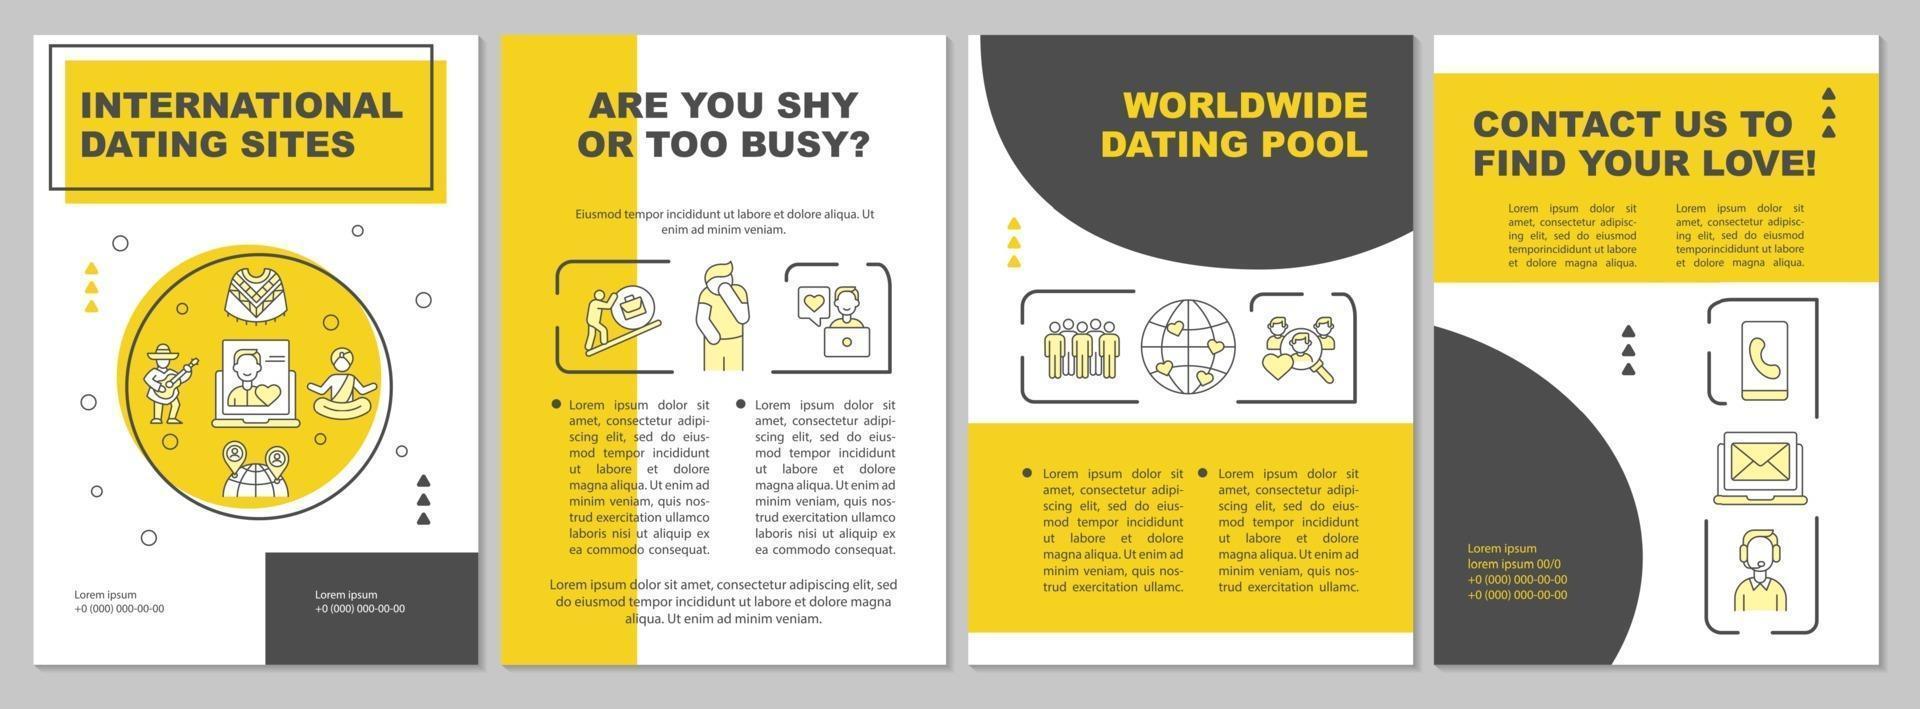 International dating sites brochure template vector